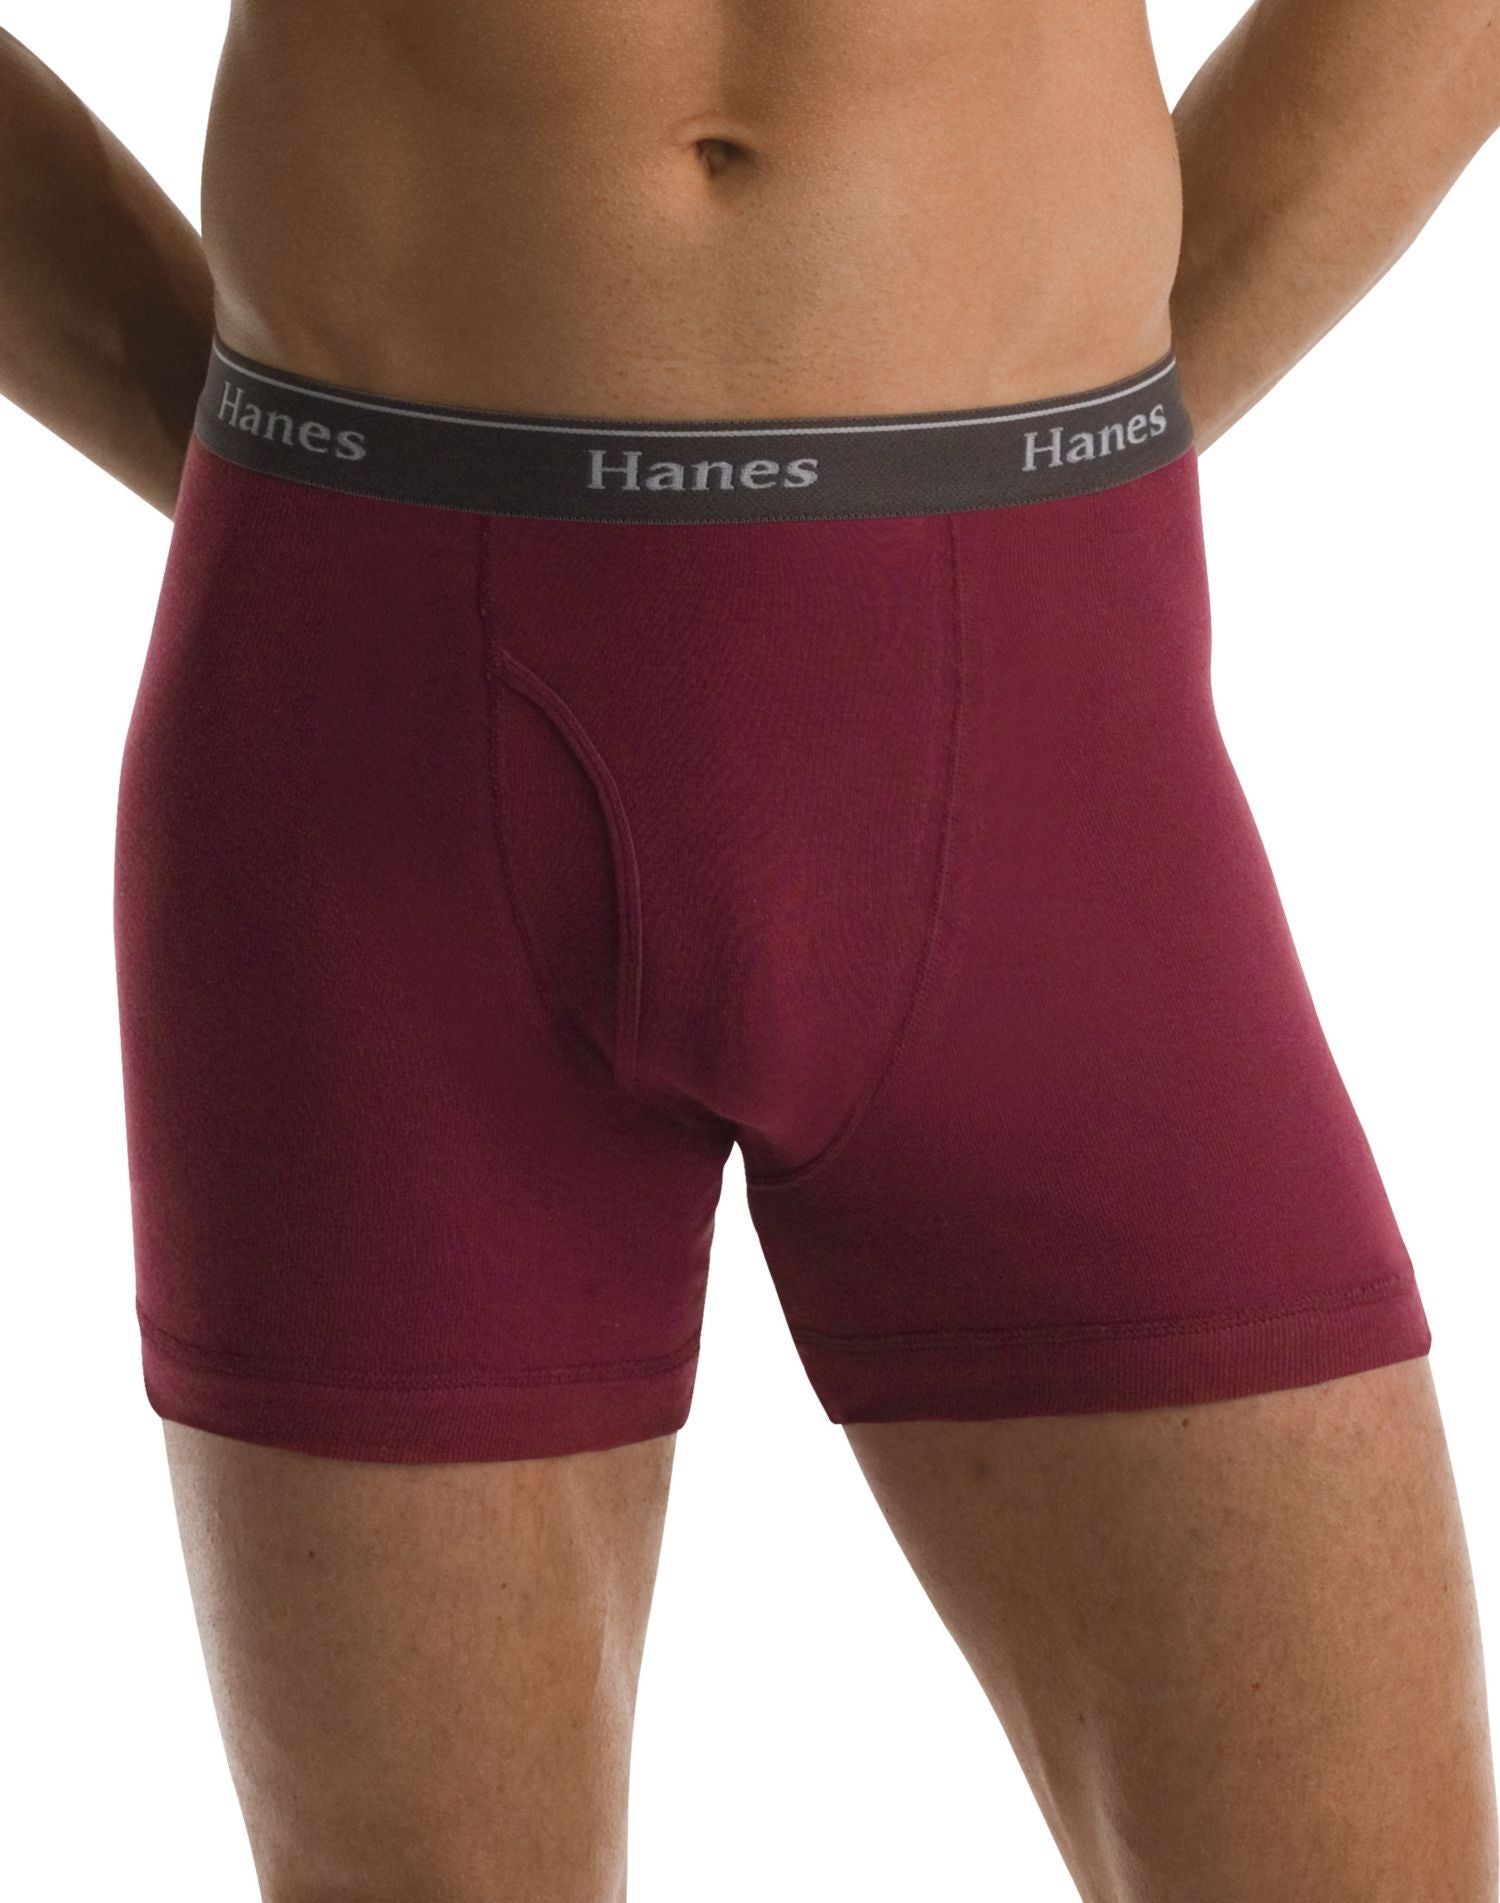 Hanes Men's Tagless Briefs w/ Comfort Flex Waistband Assorted Colors 6-Pk